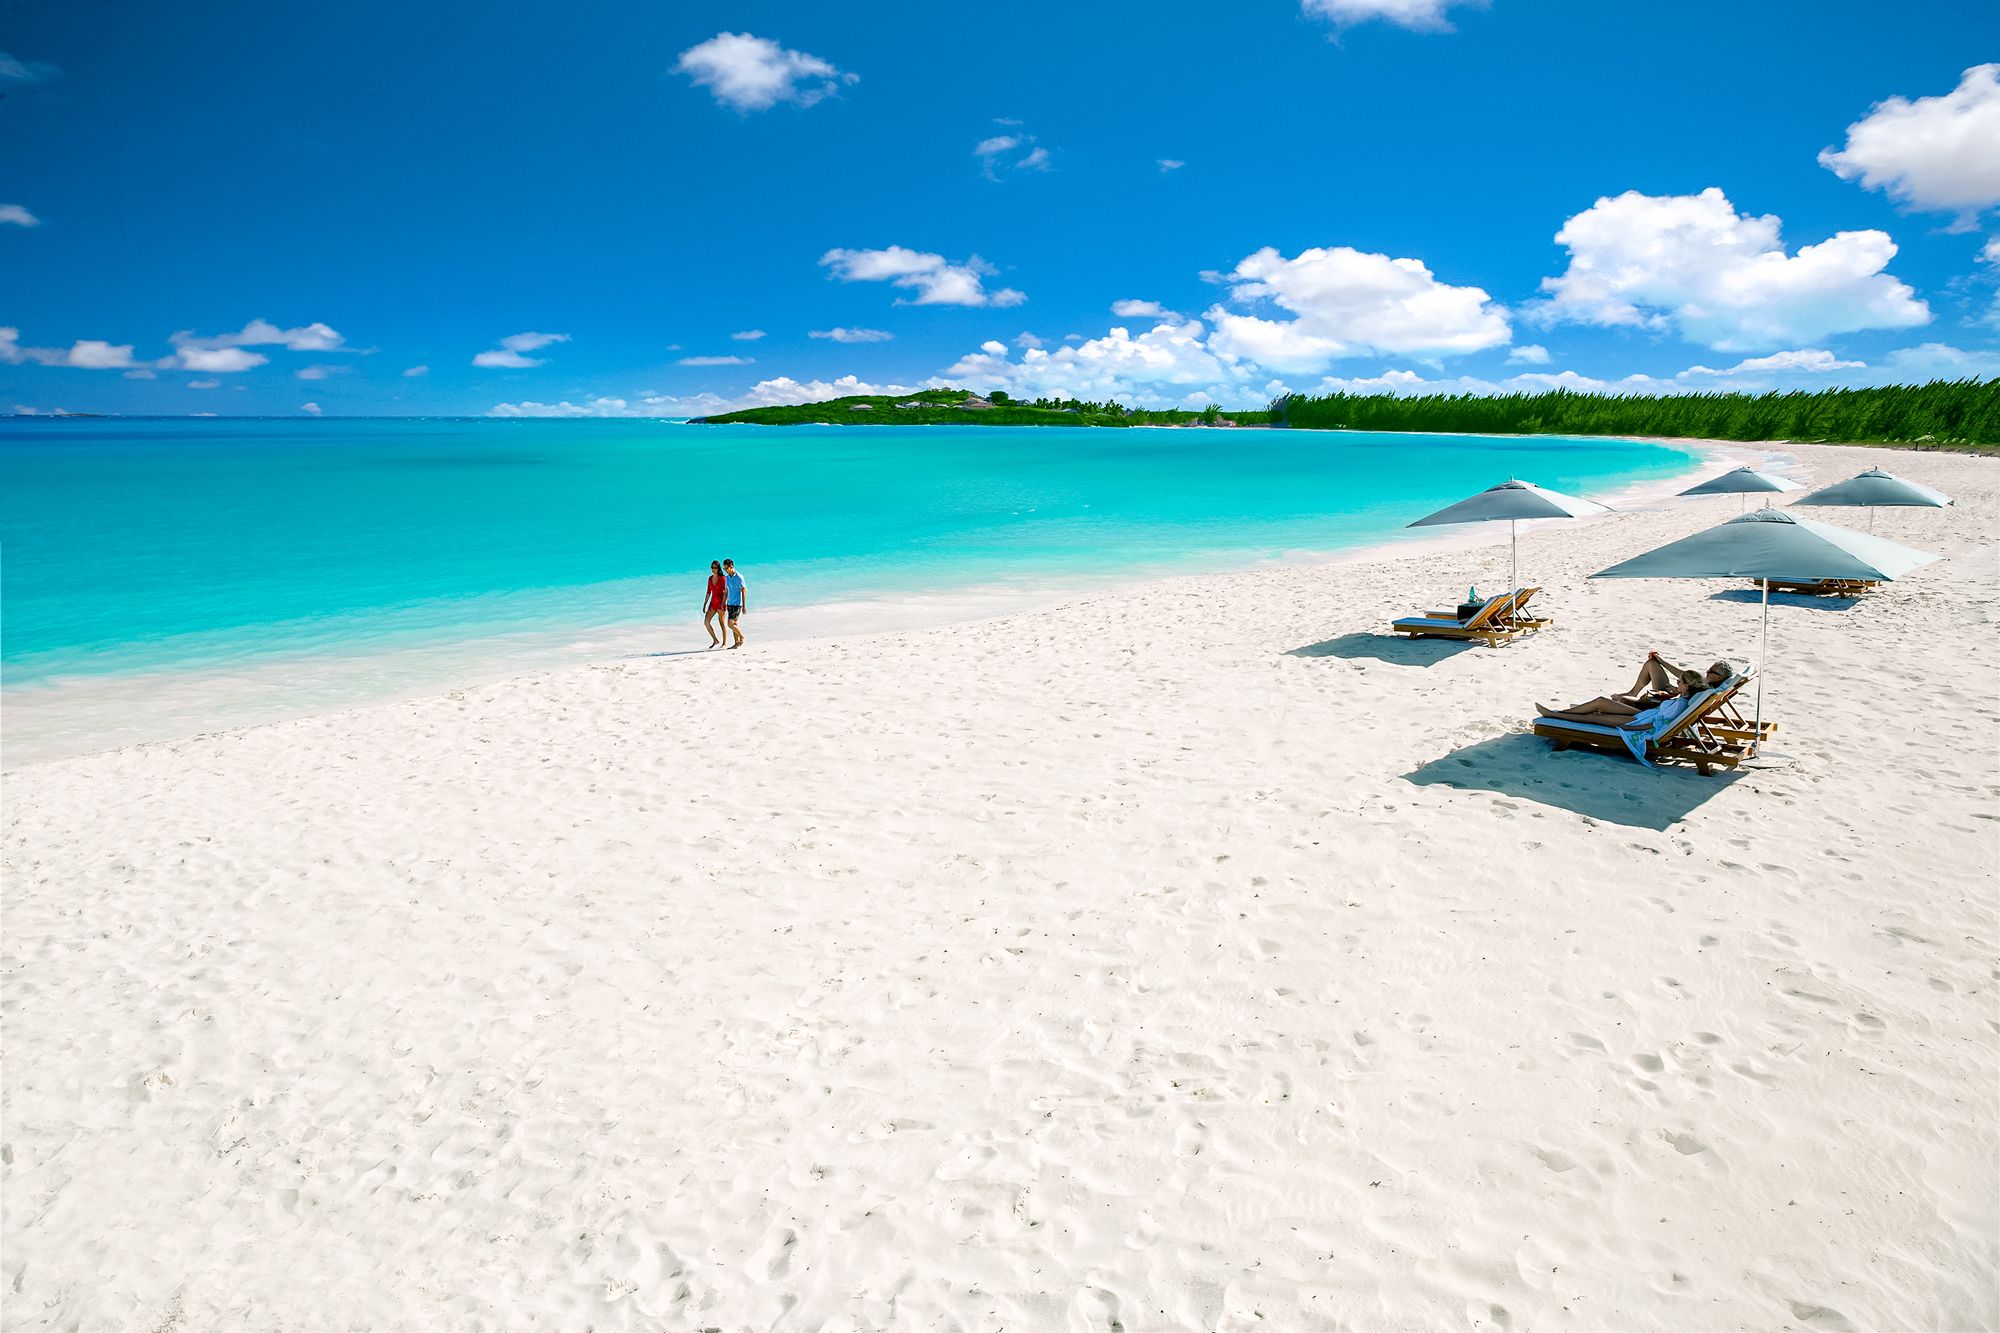 Sandals-Emerald-Bay-White-Sand-Beach-Couple